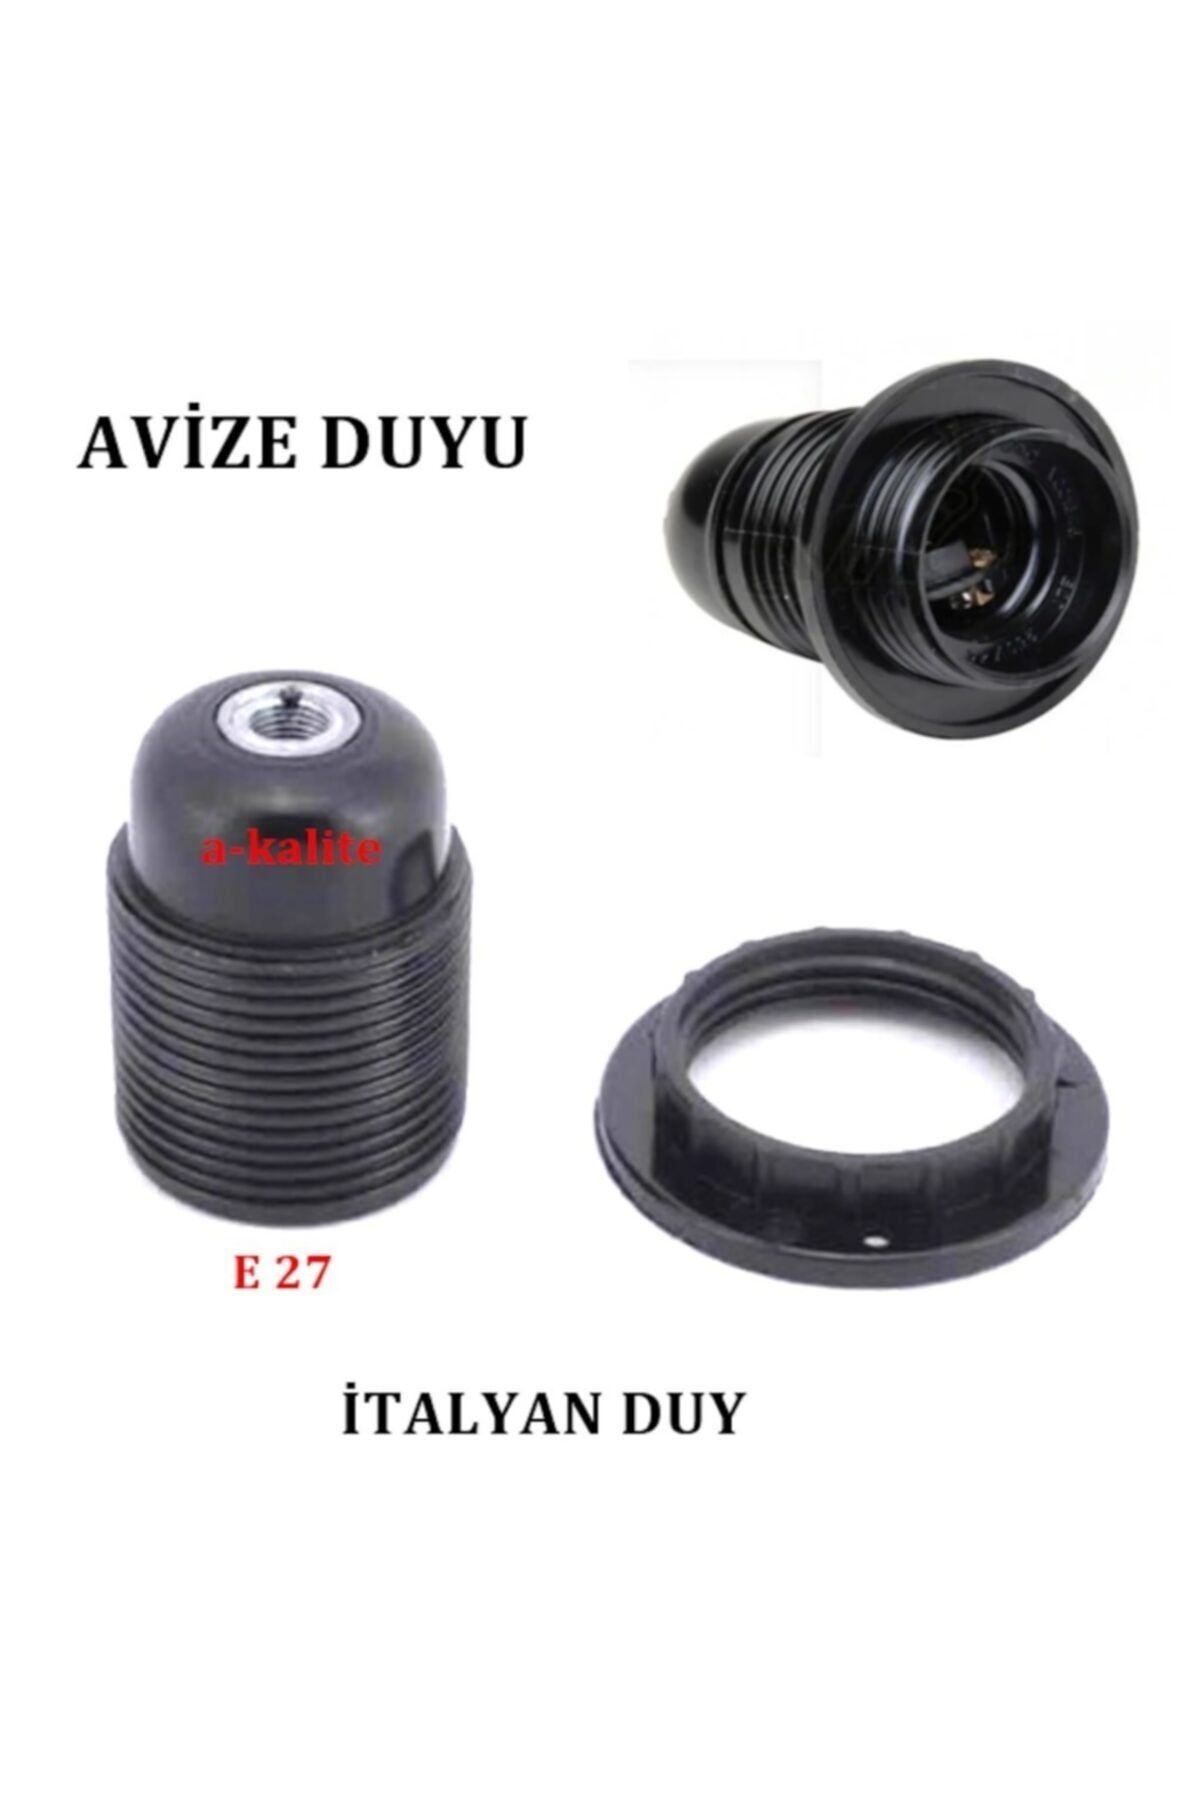 Ars Italyan Duy-avize Duyu E27